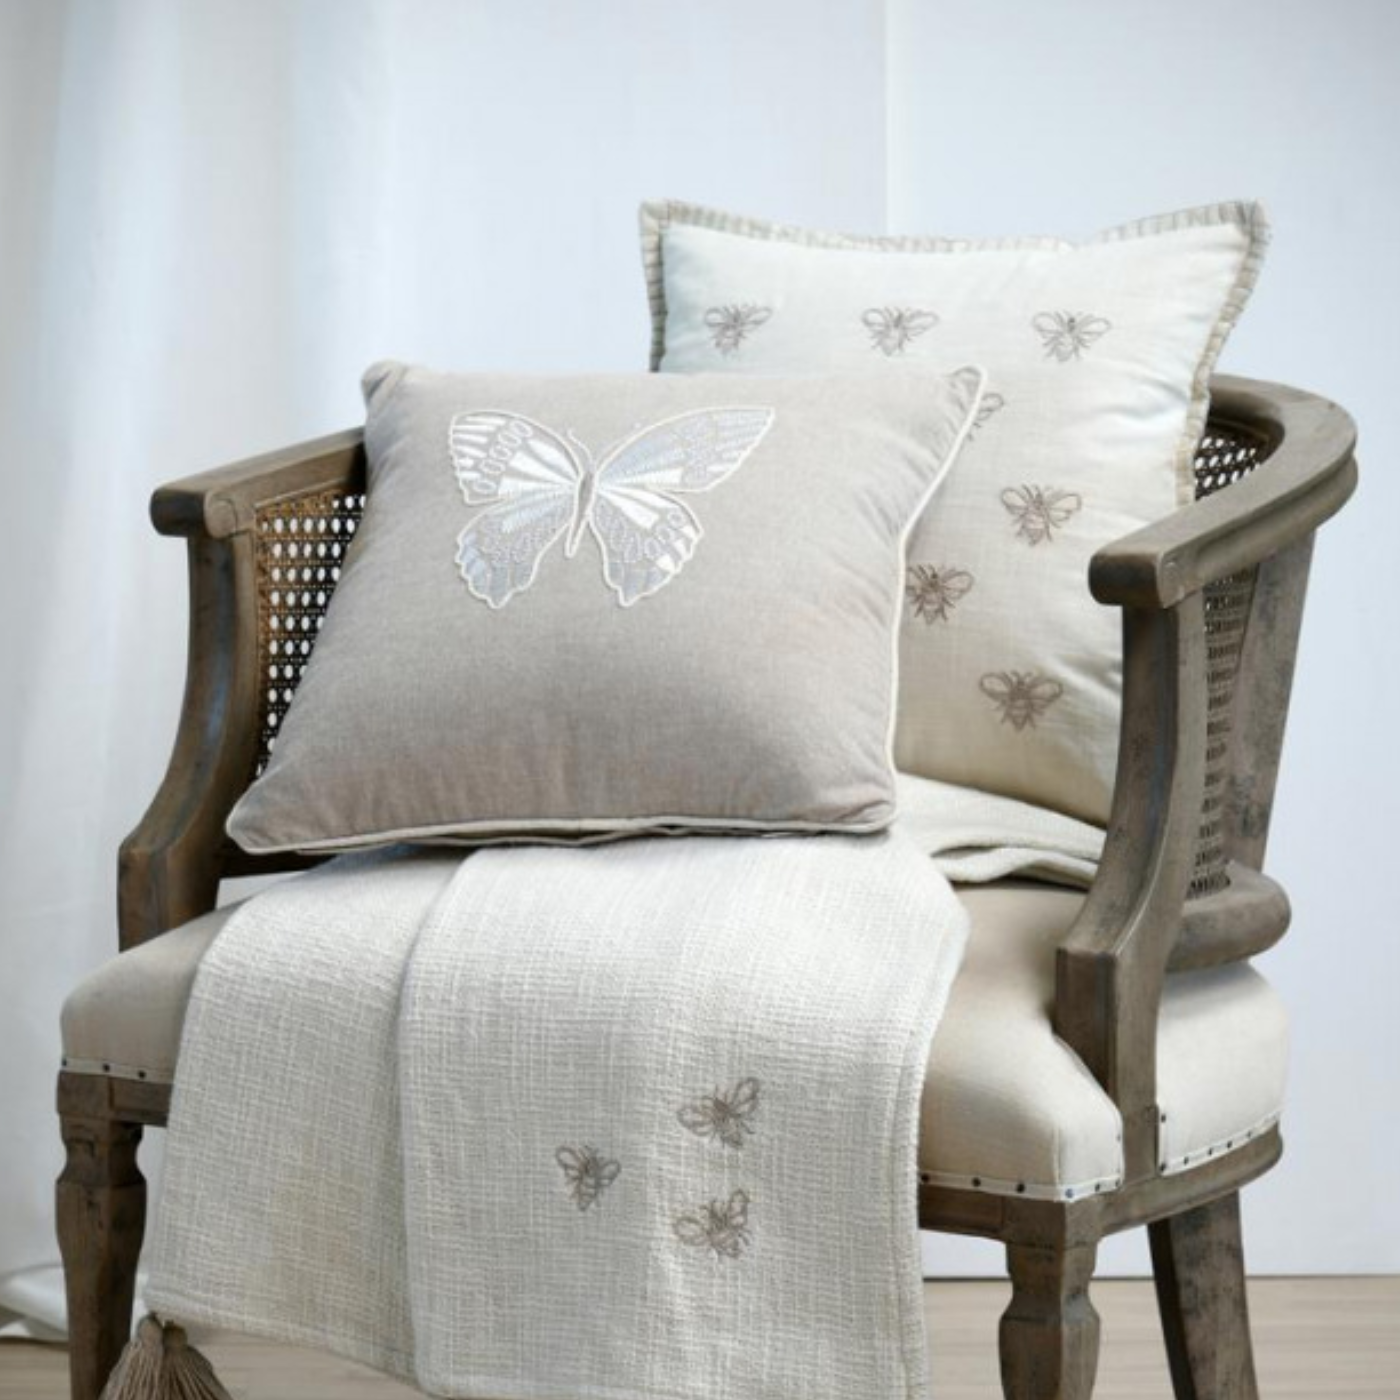 Cushions in a chair setting 